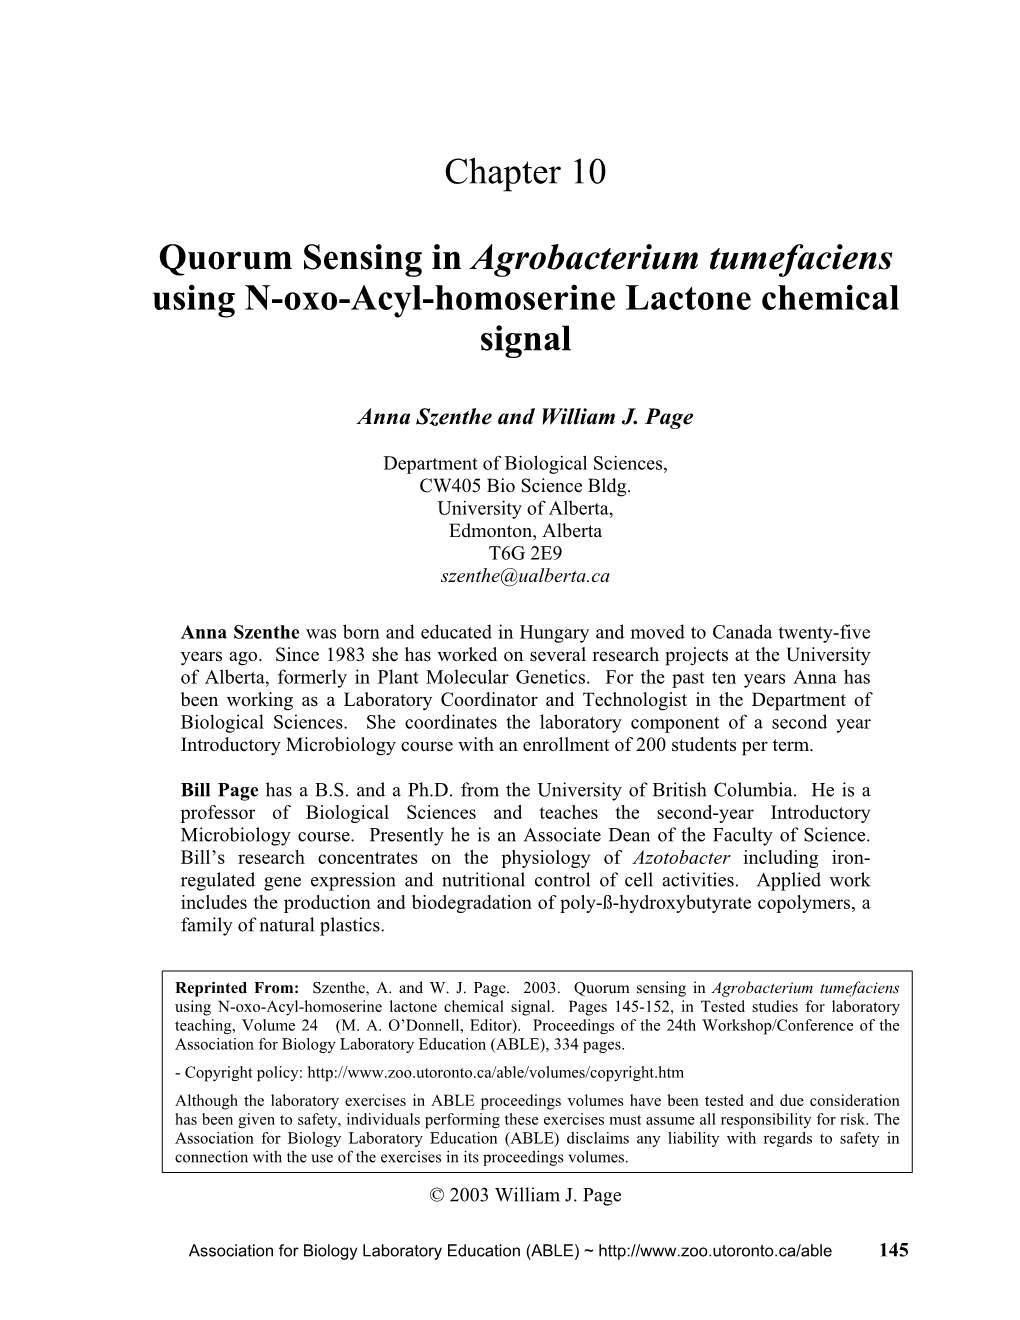 Chapter 10 Quorum Sensing in Agrobacterium Tumefaciens Using N